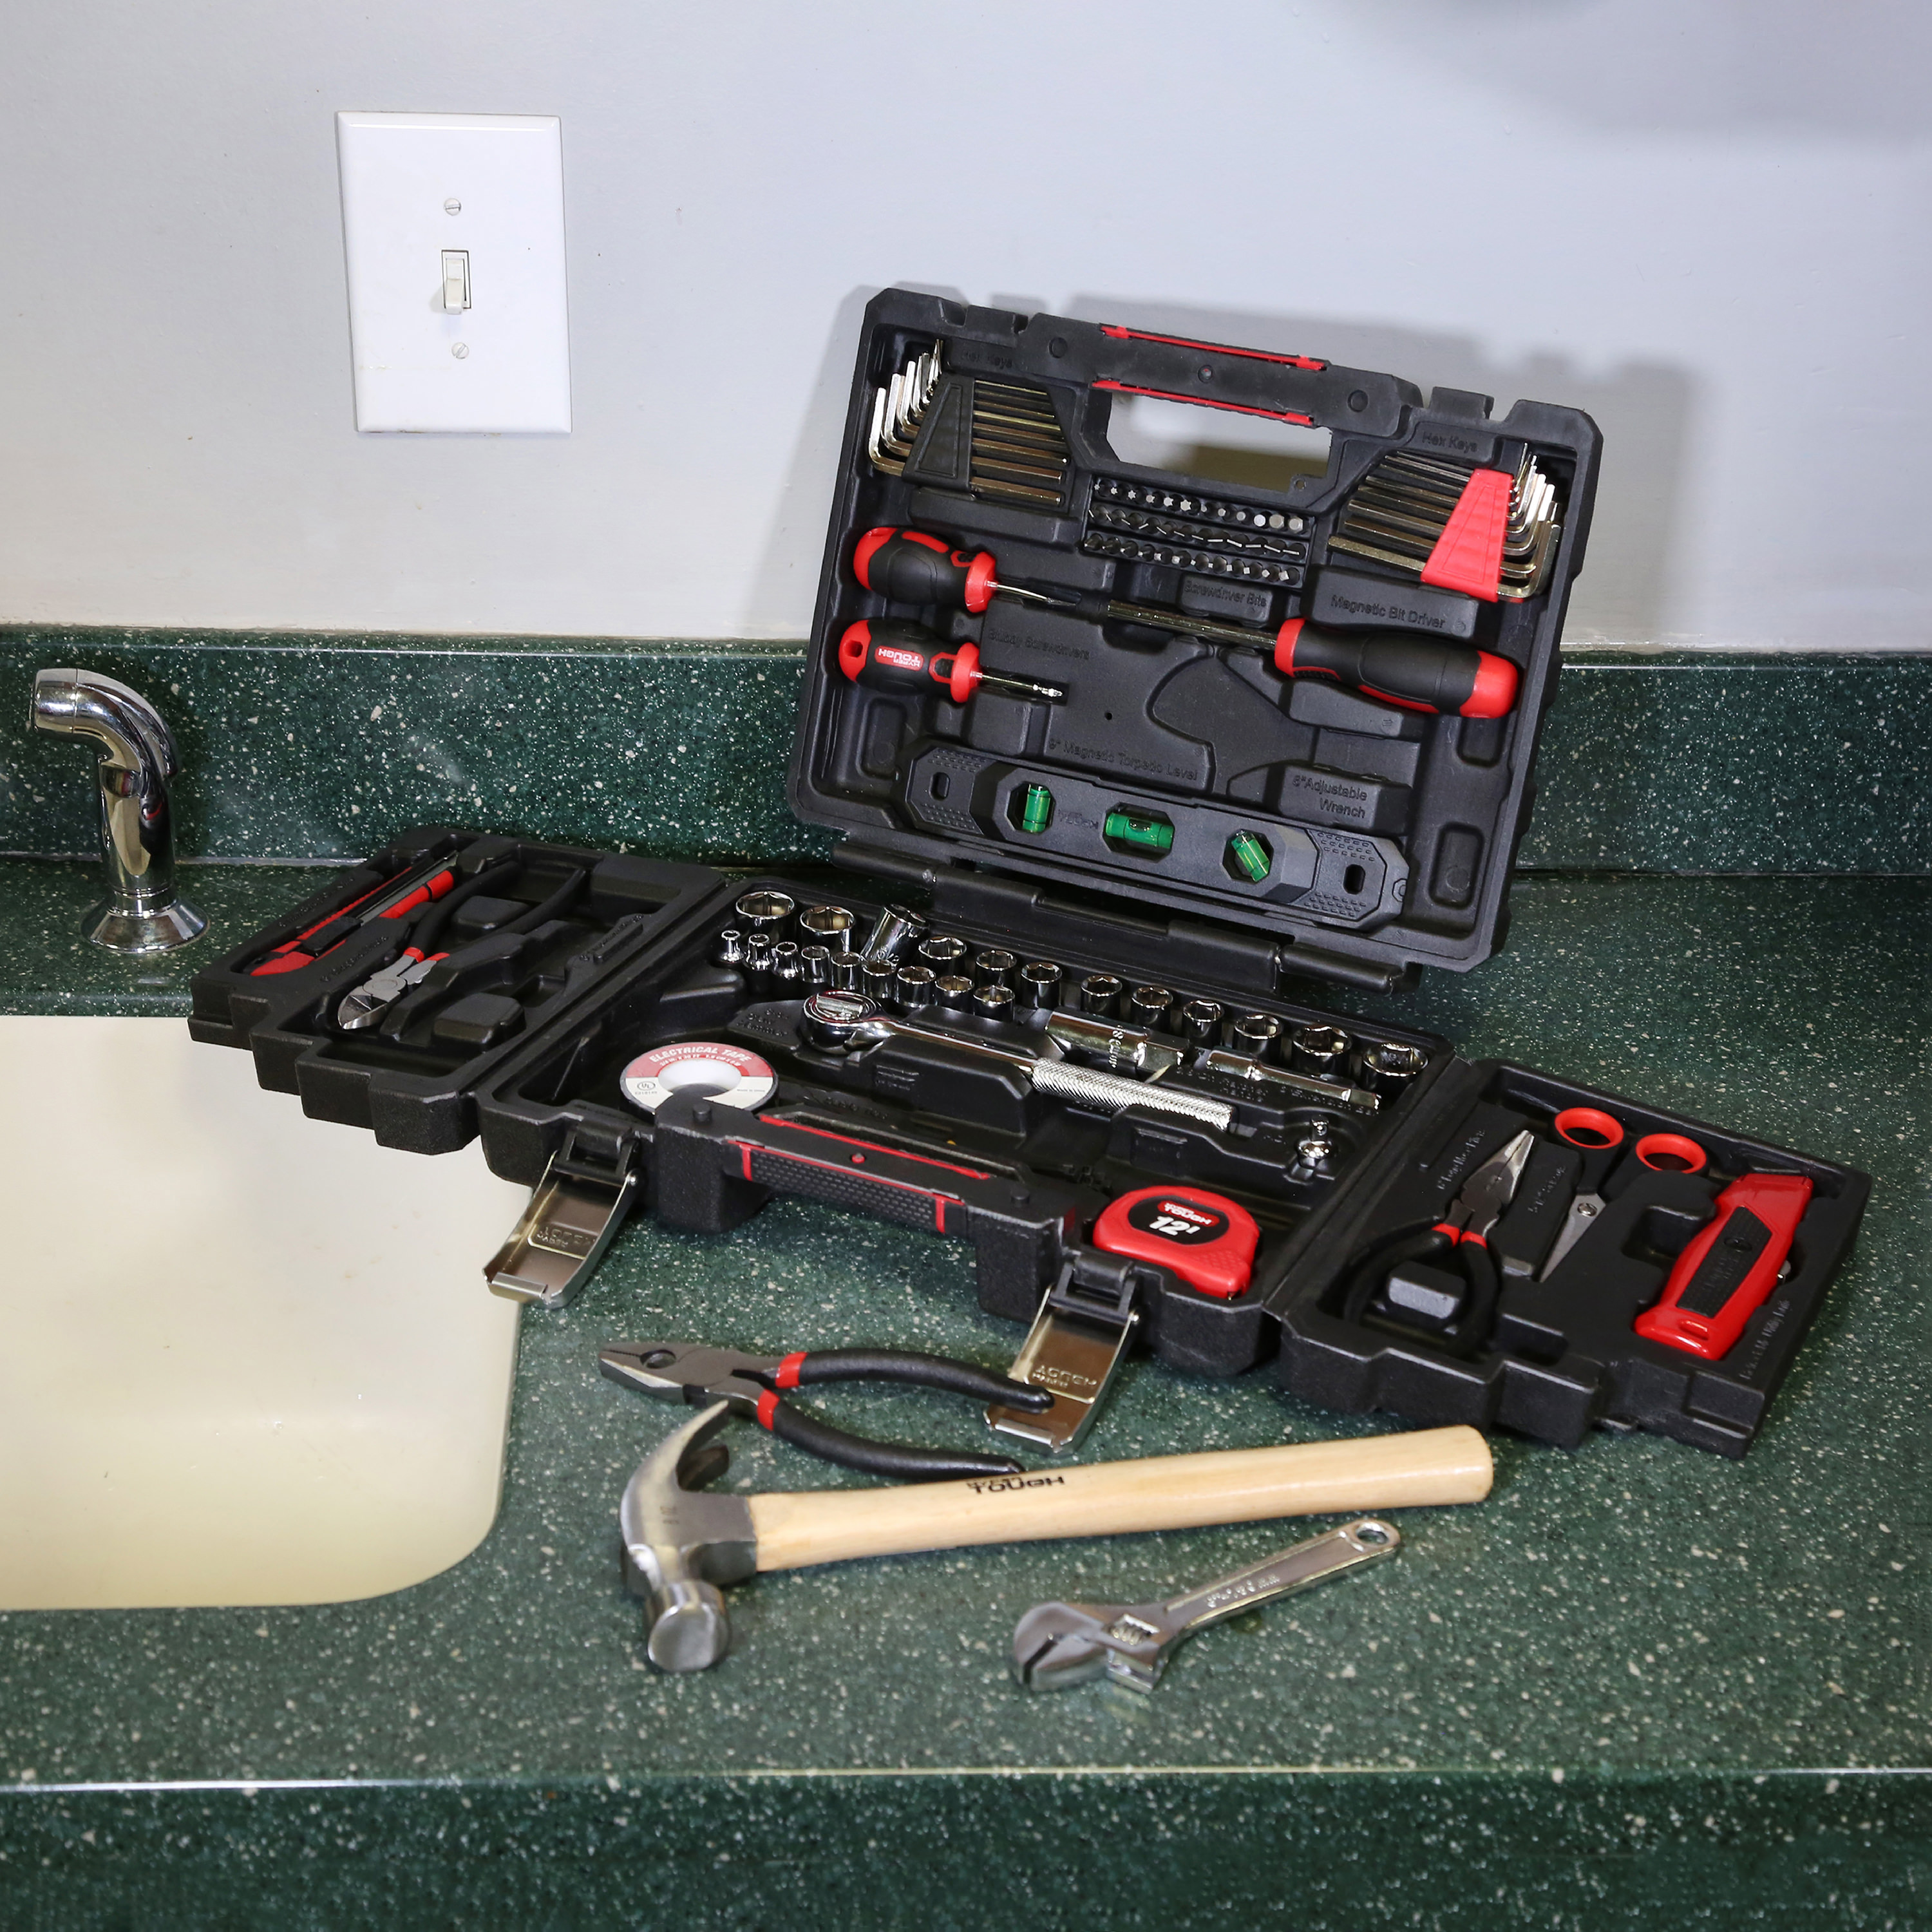 Hyper Tough 118-Piece Tool Set for Home Repairs, Model 7003